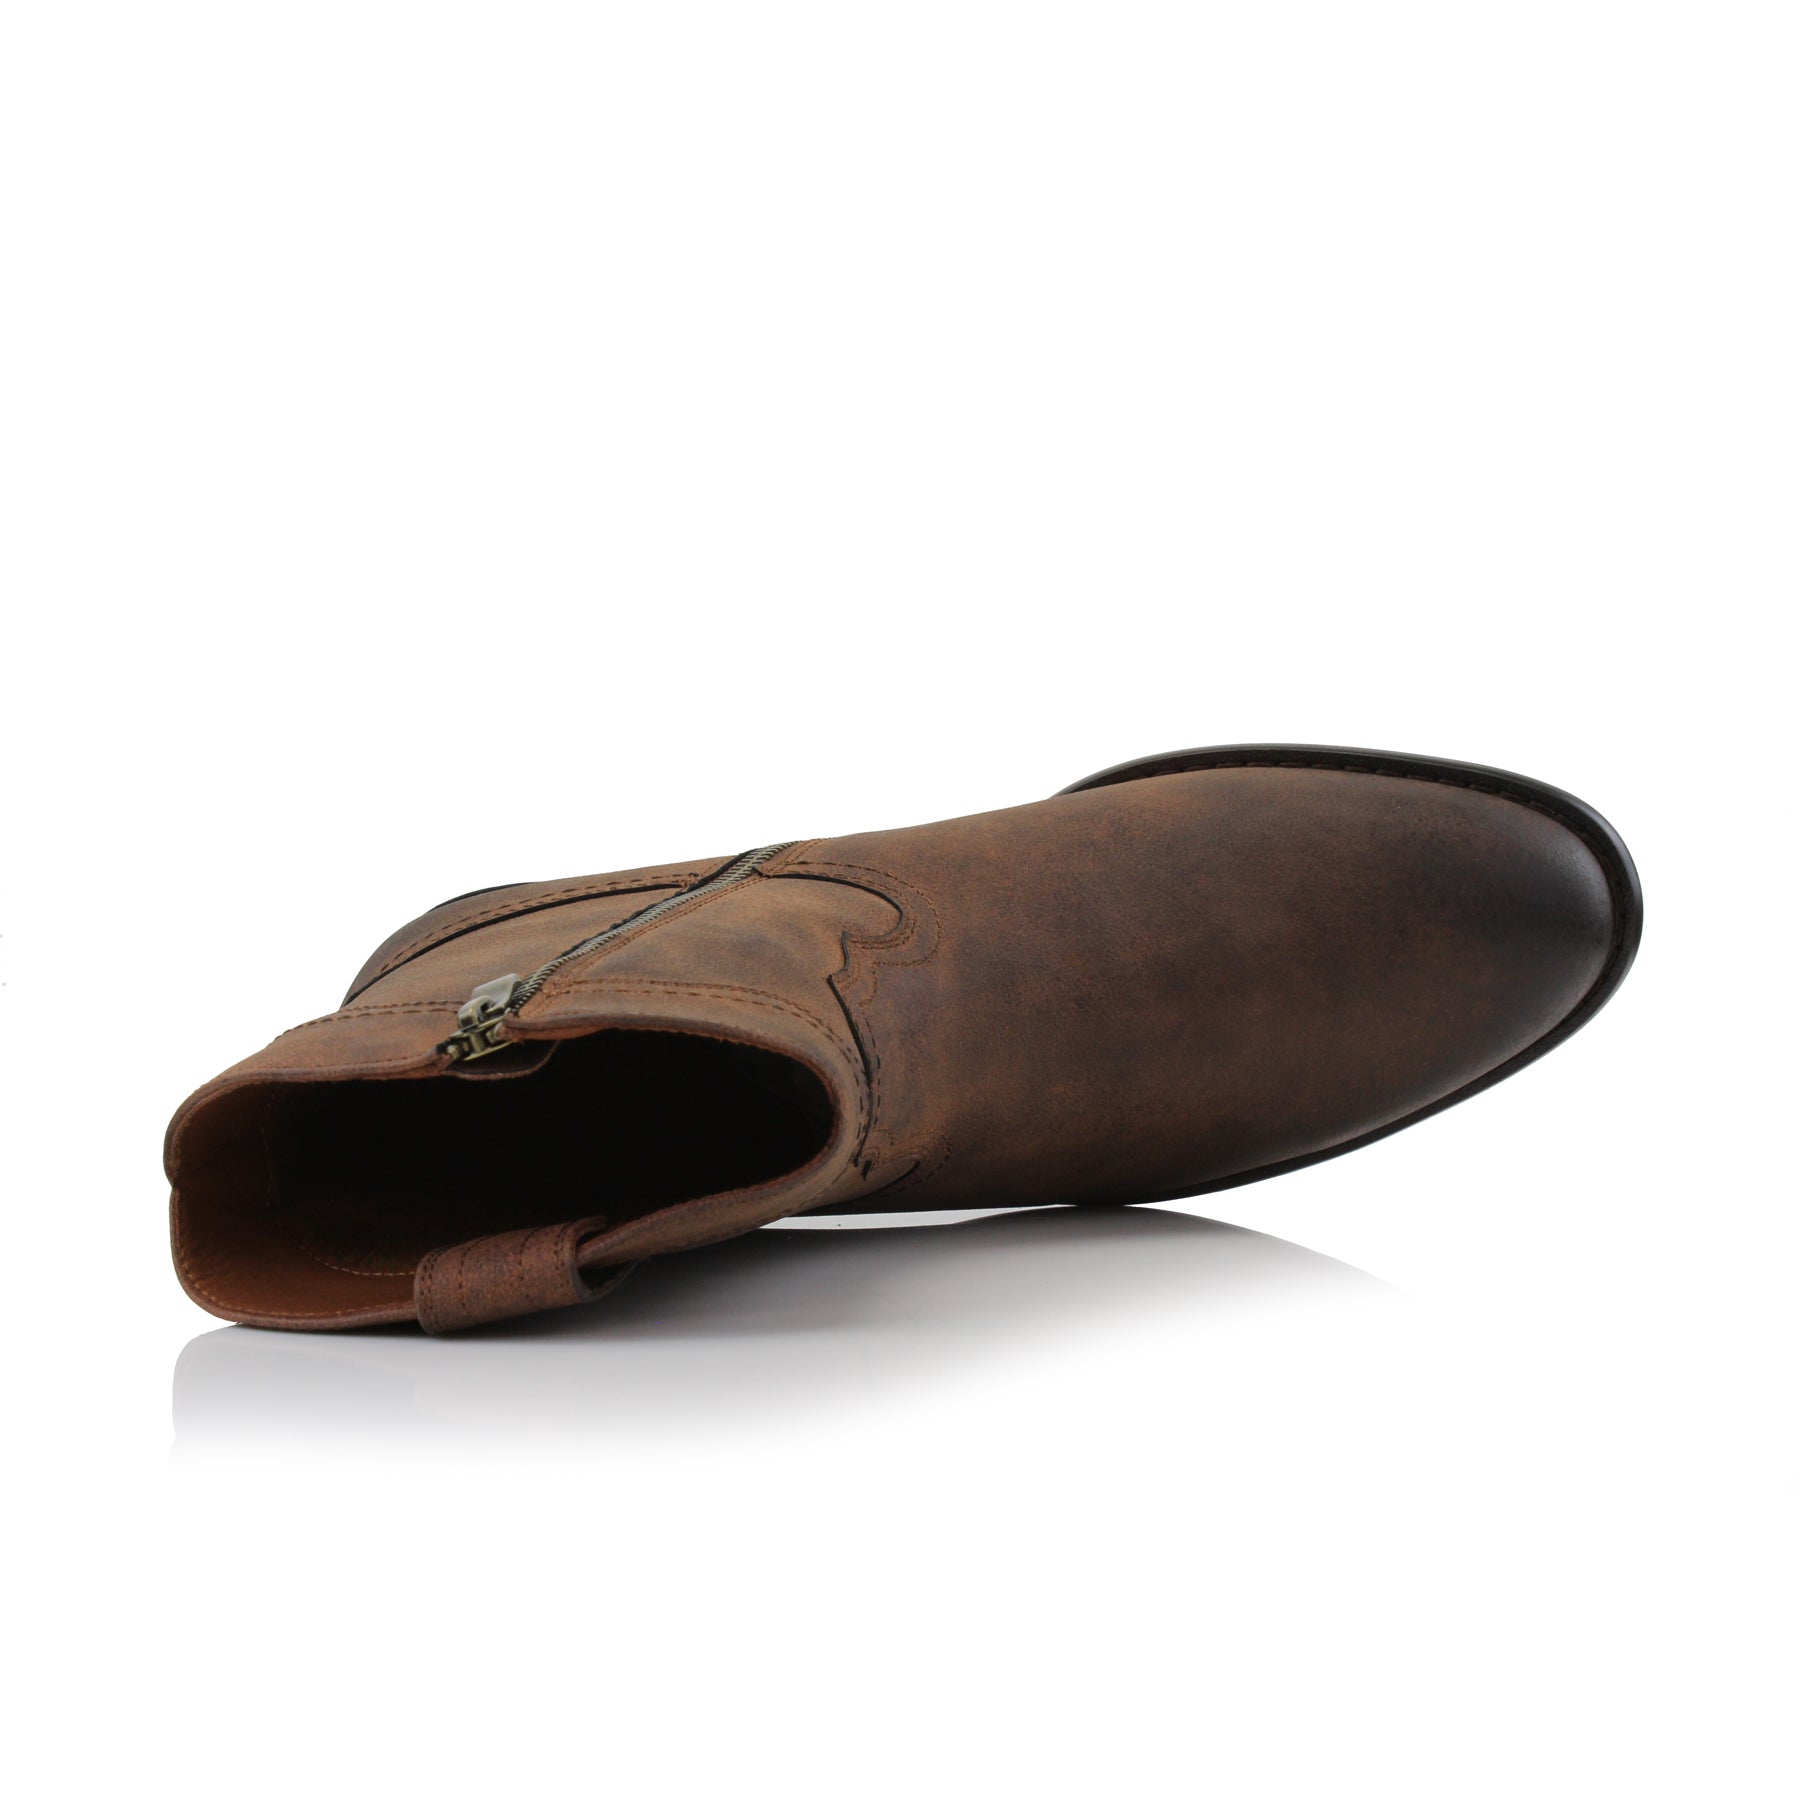 Men's Western Boots | Austin by Ferro Aldo | Conal Footwear | Top-Down Angle View